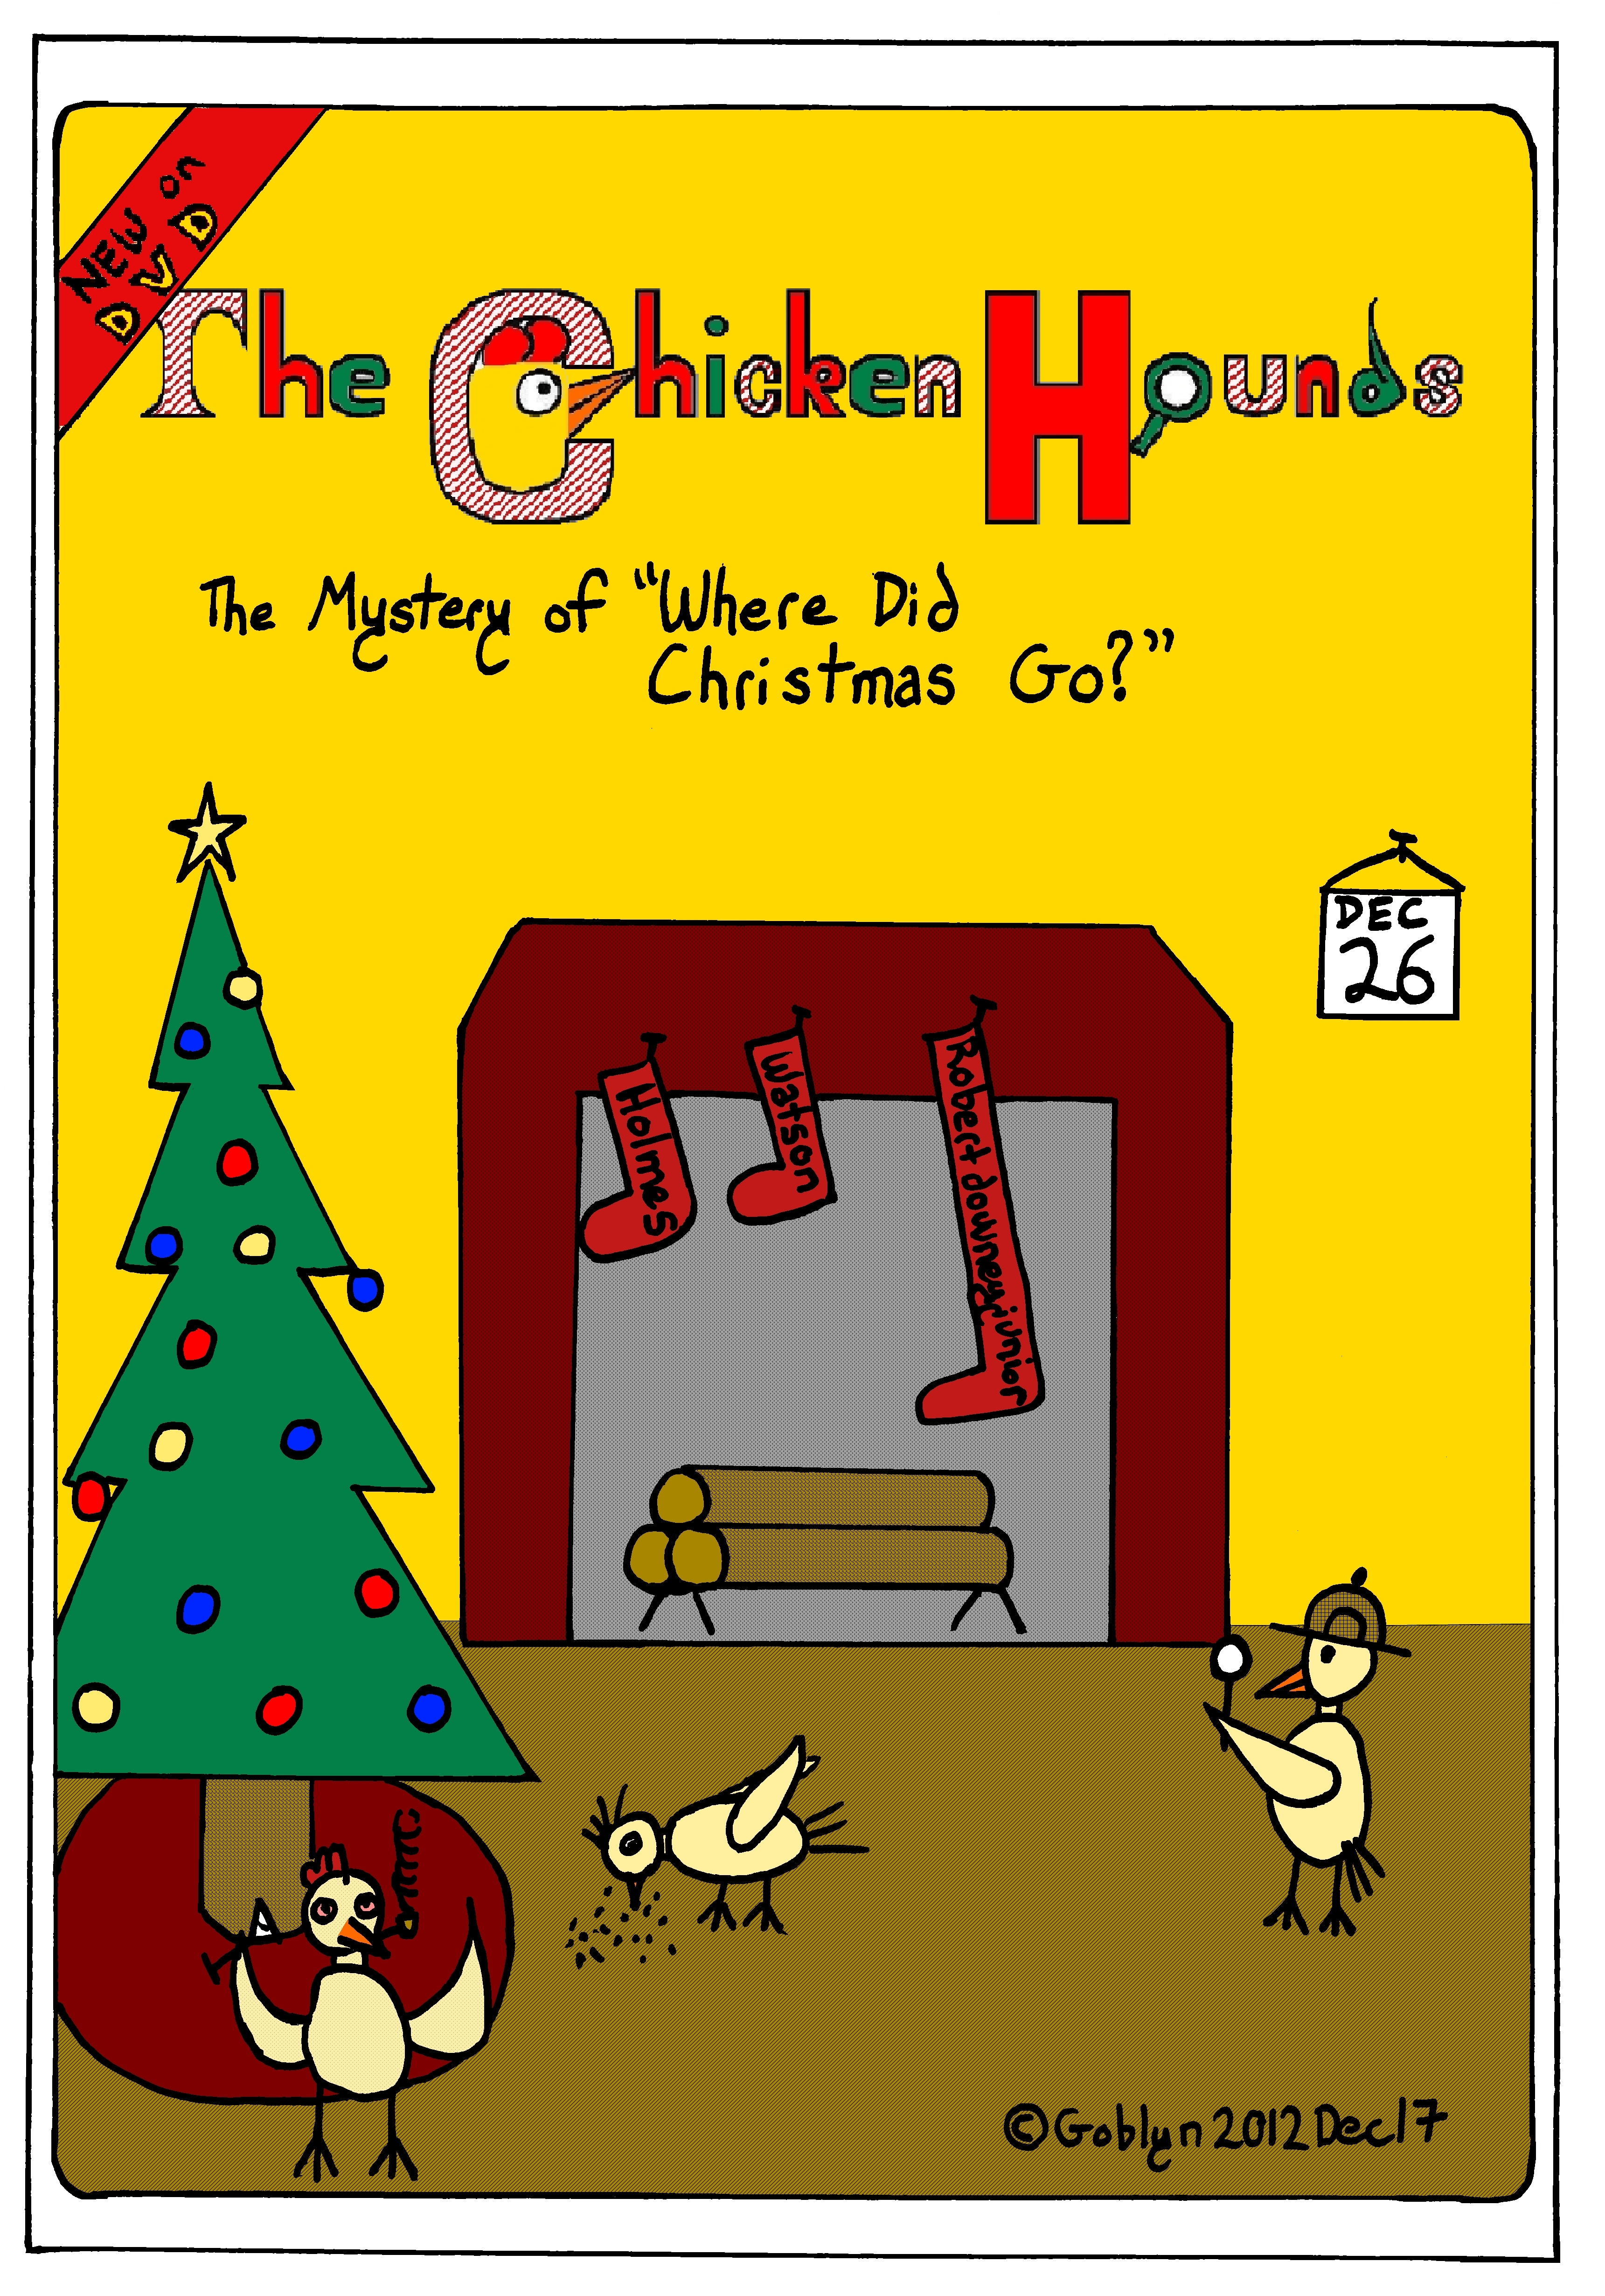 Chicken Hounds Christmas